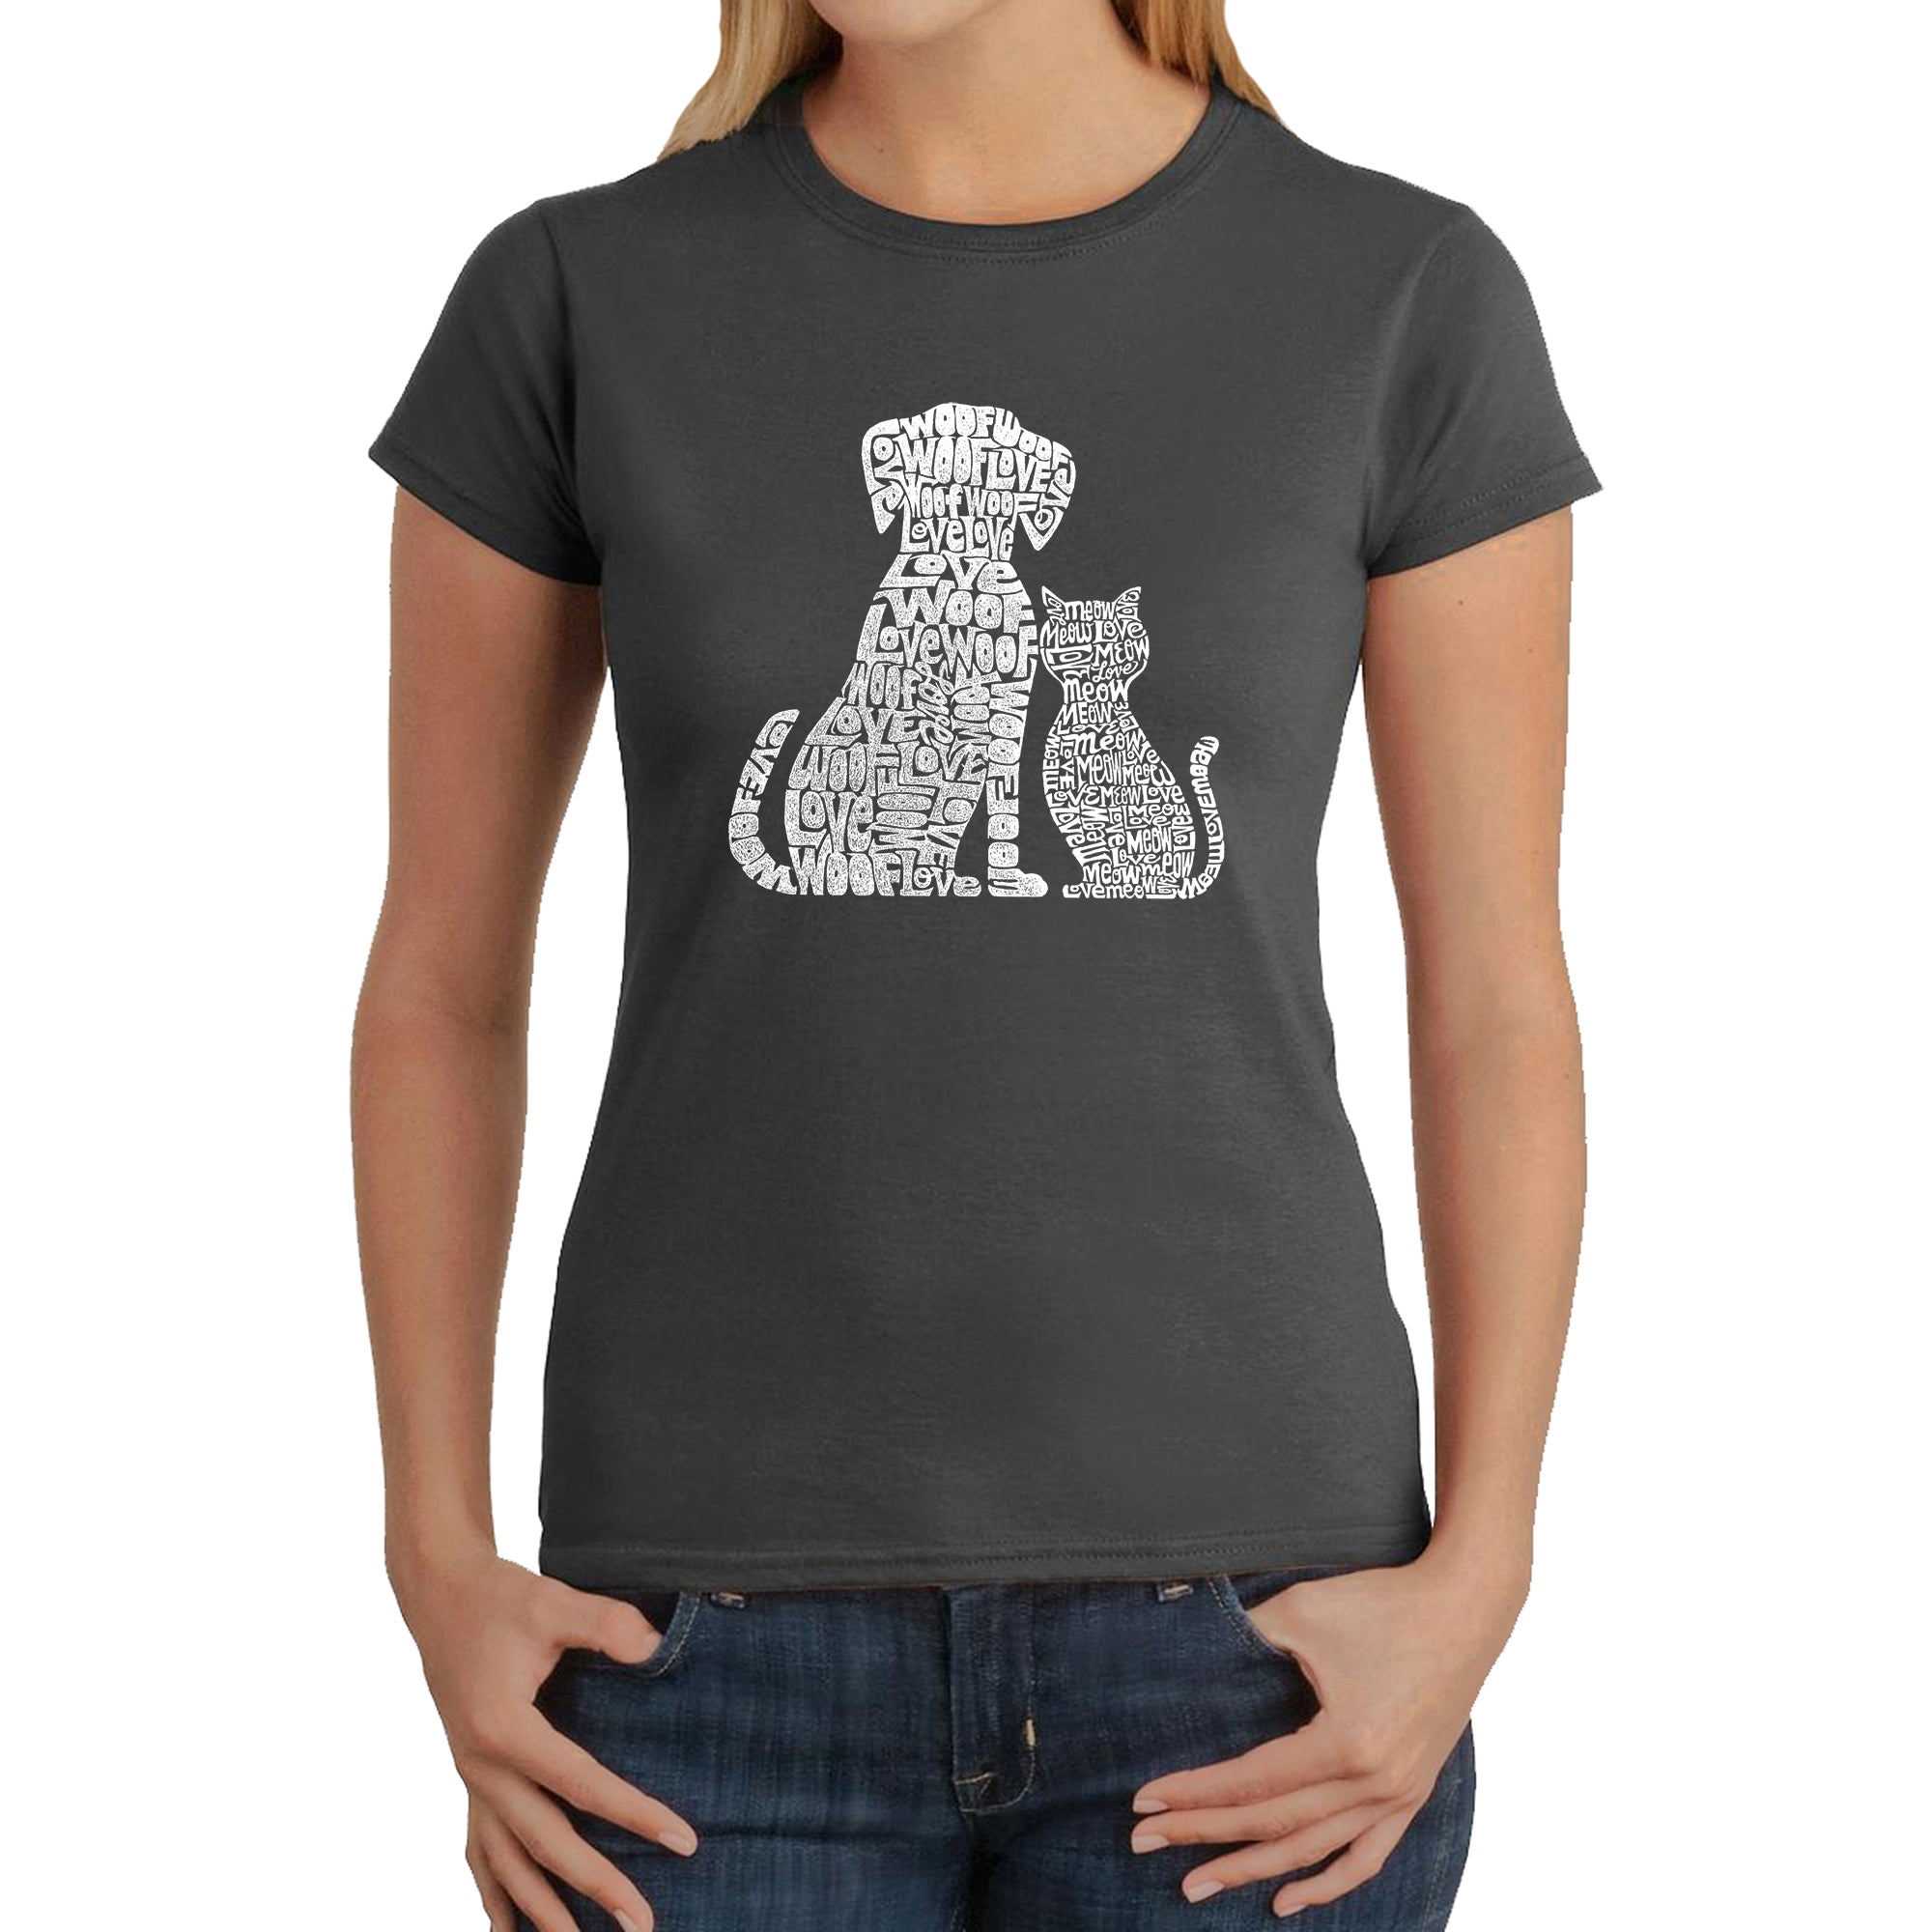 Dogs And Cats - Women's Word Art T-Shirt - Grey - Medium